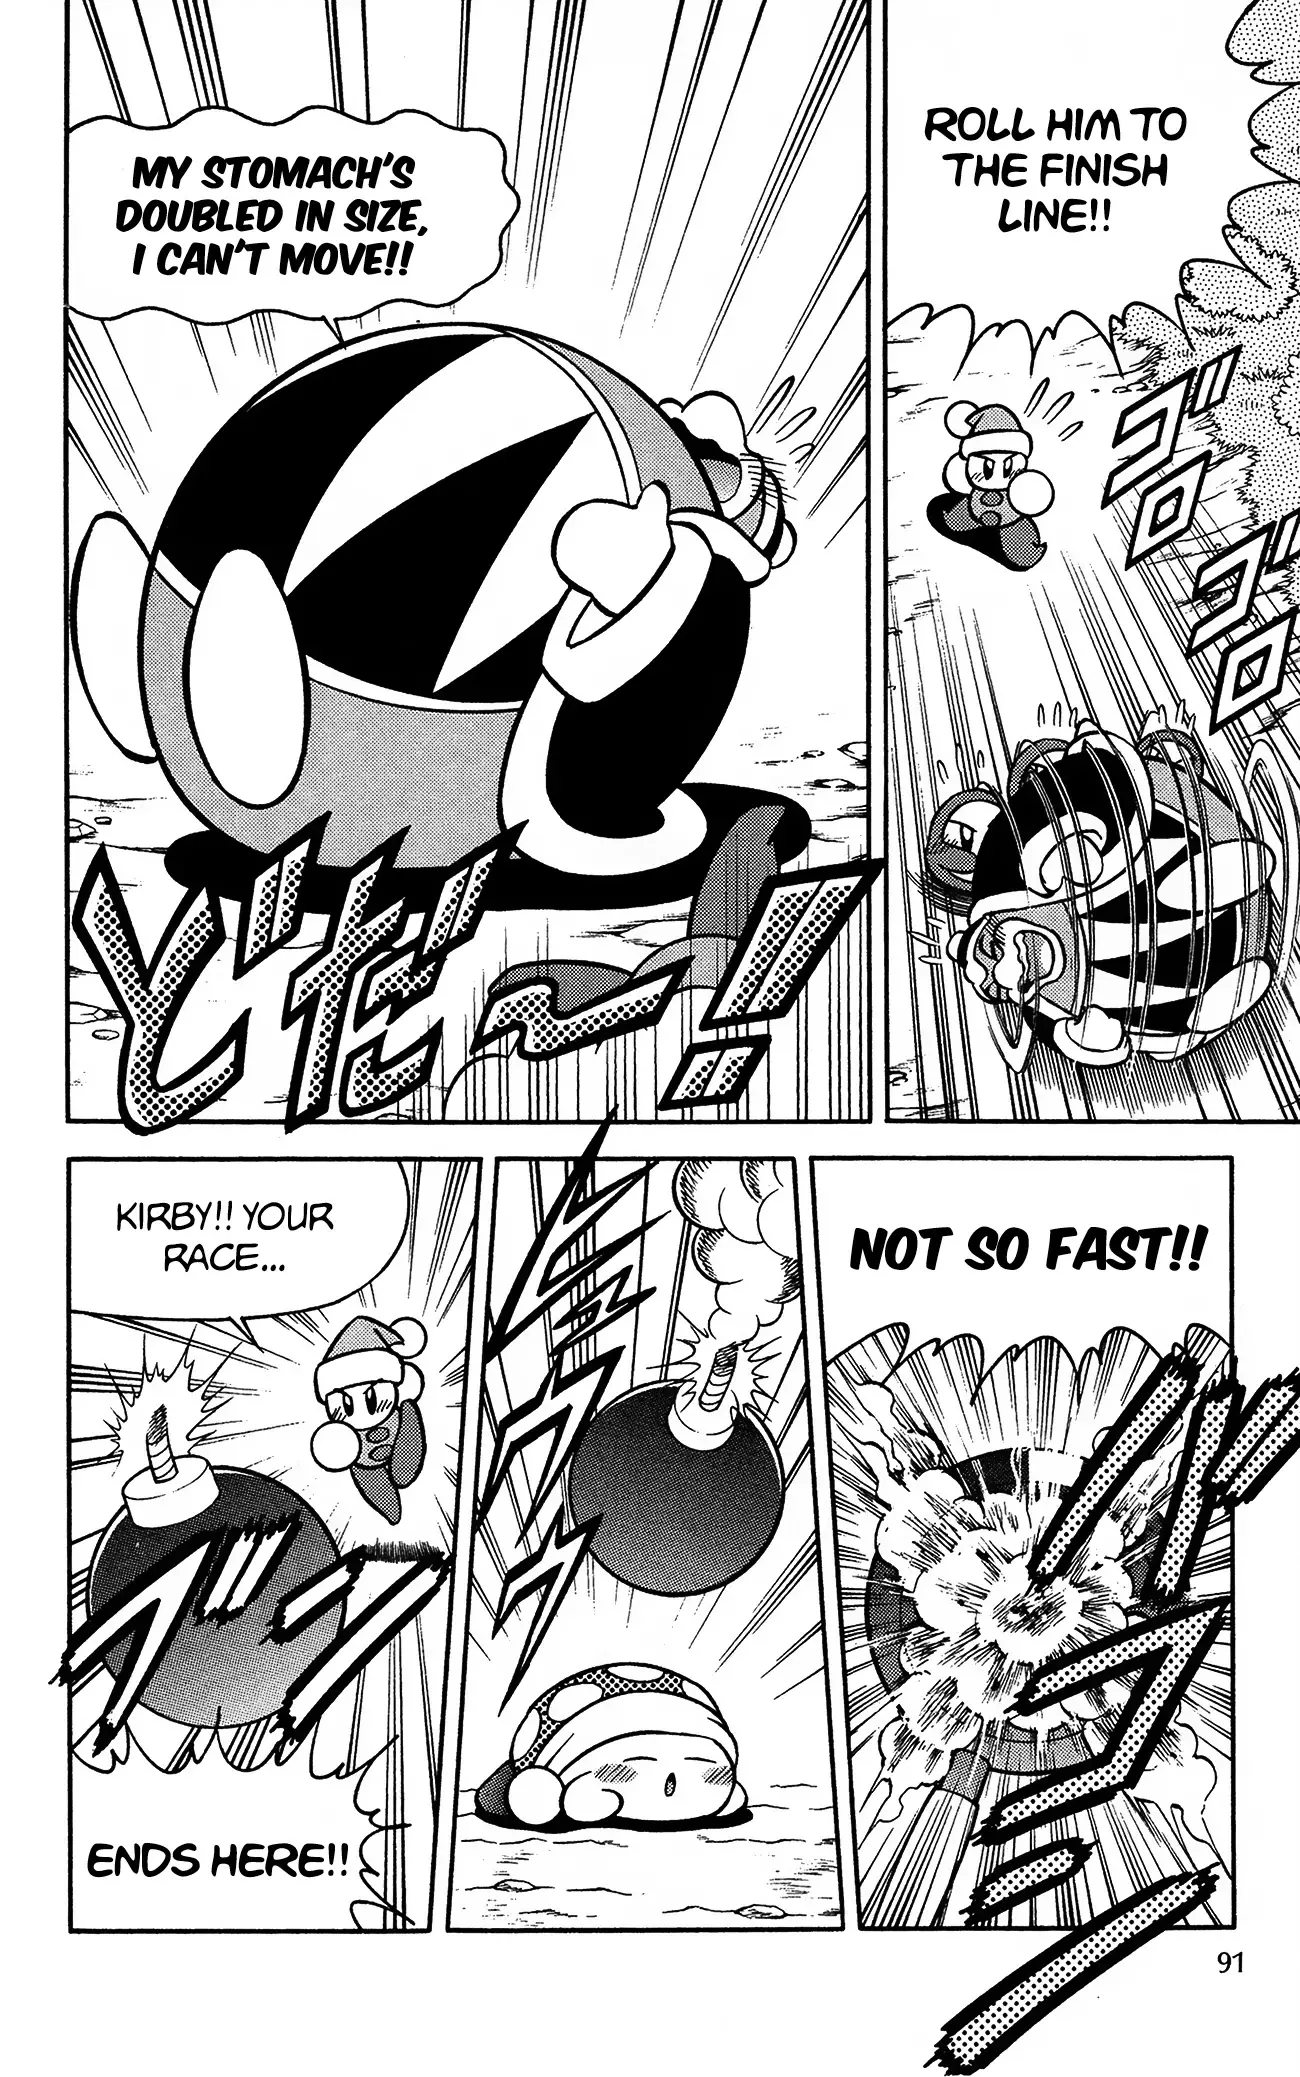 Kirby Of The Stars - Pupupu Hero - 6 page 9-9a09a35f